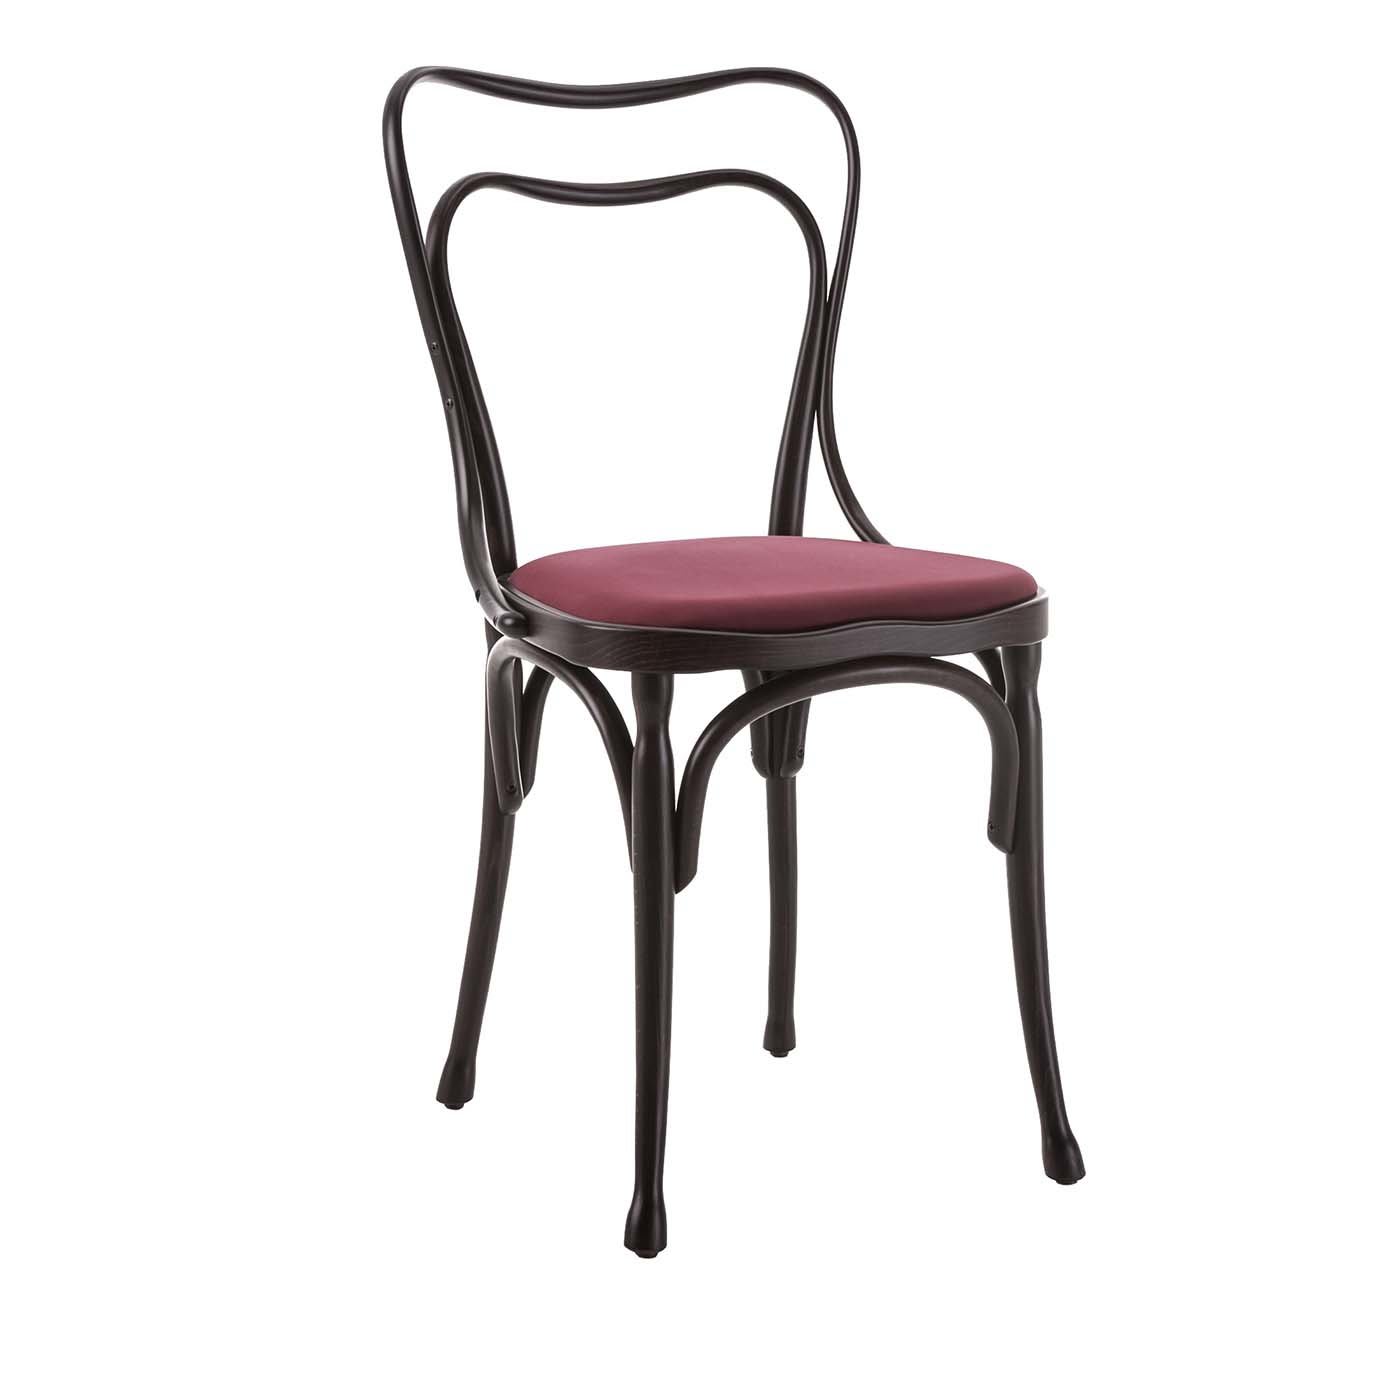 Loos Café Museum Chair with Cushion by Adolf Loos - Gebrüder Thonet Vienna GmbH (GTV) – Wiener GTV Design